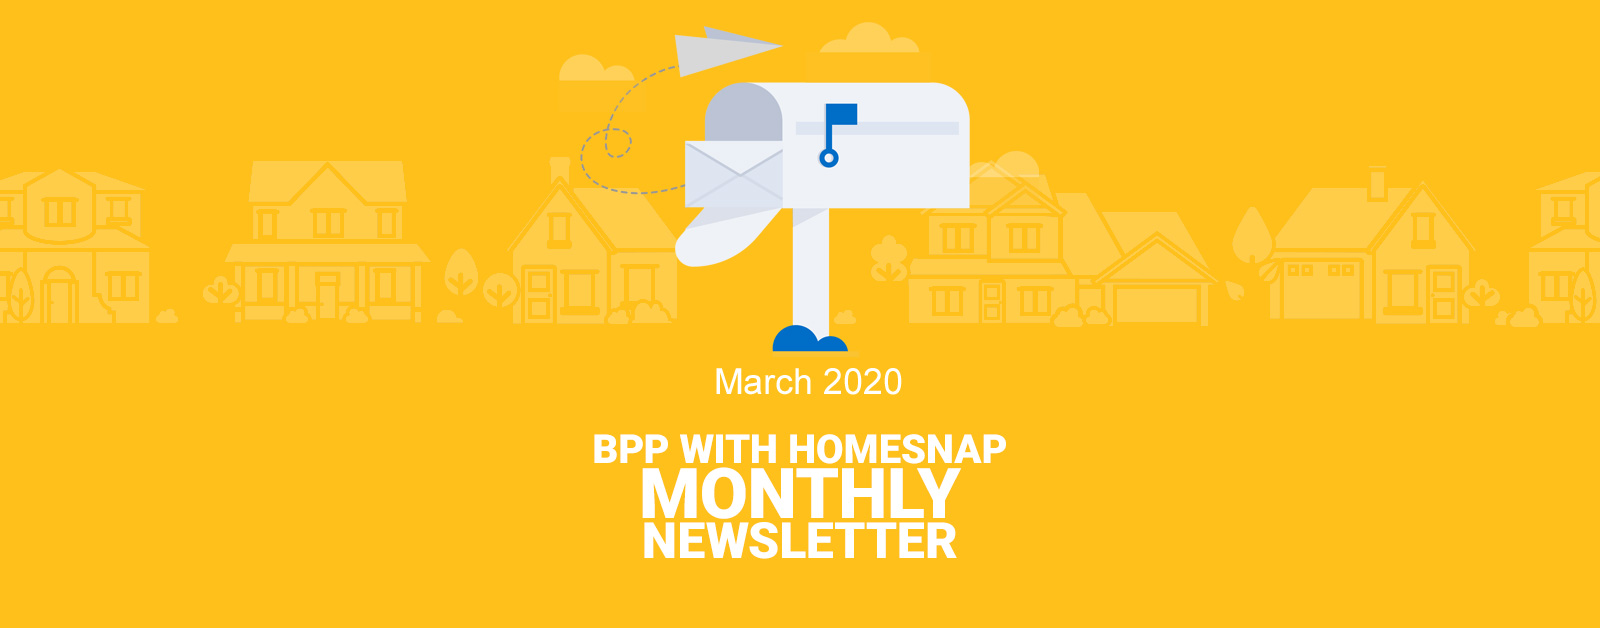 Newsletter March 2020